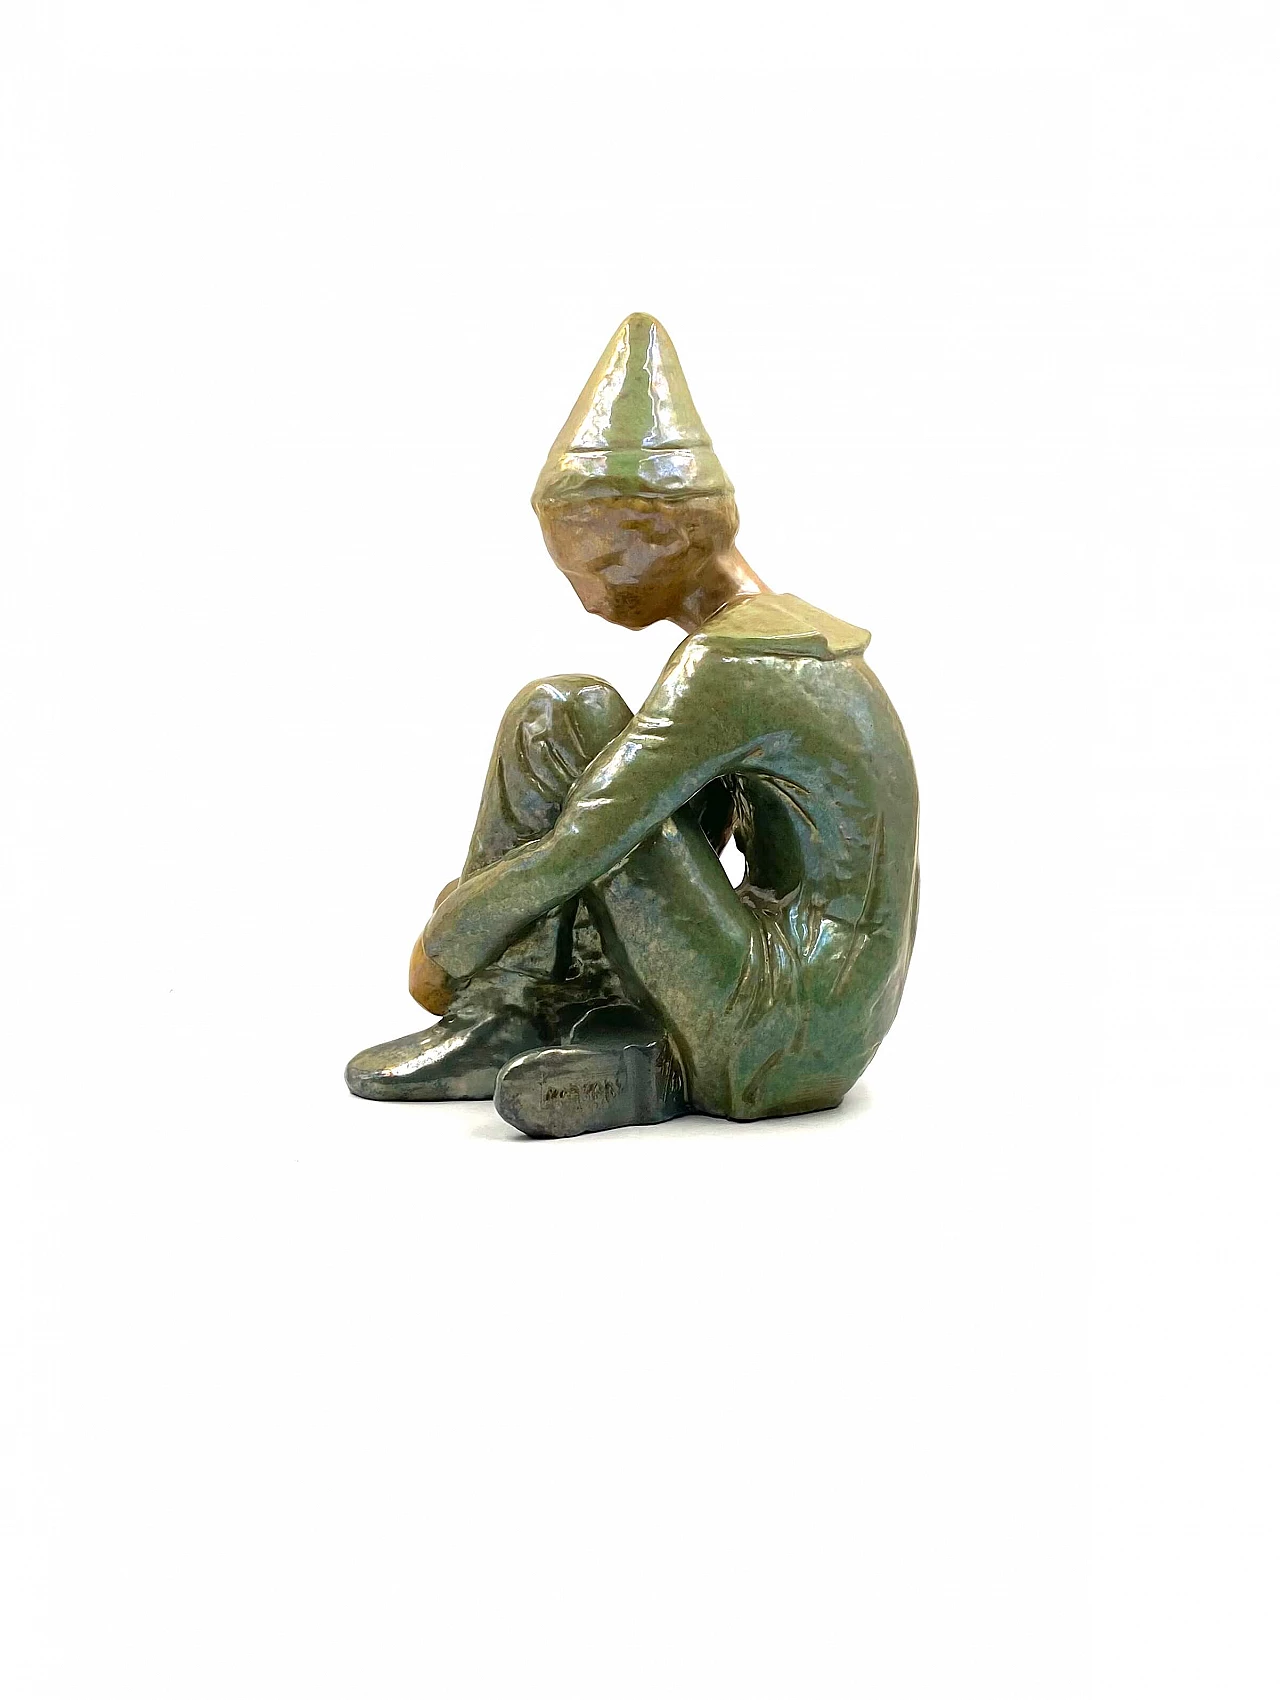 Seated boy statuette in green ceramic by Giordano Tronconi, 1950s 1